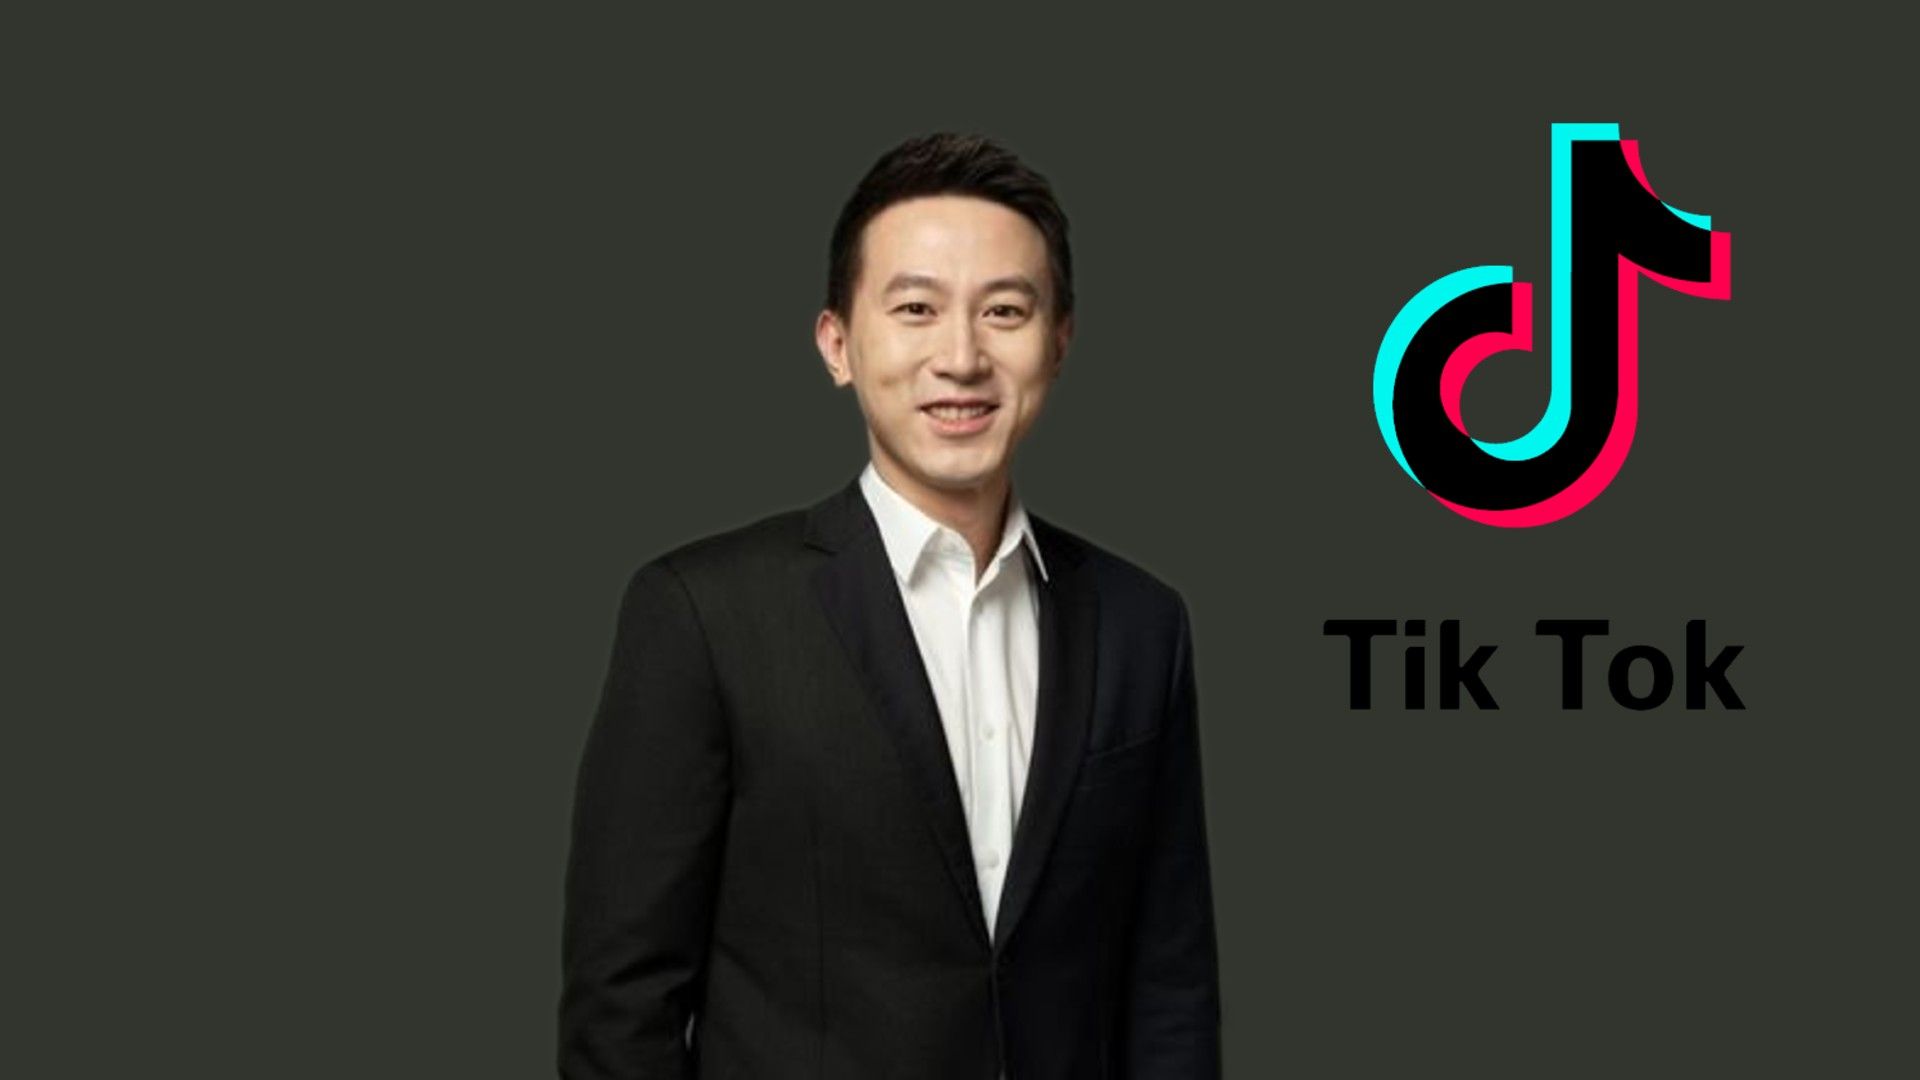 TikTok names Shouzi Chew as CEO